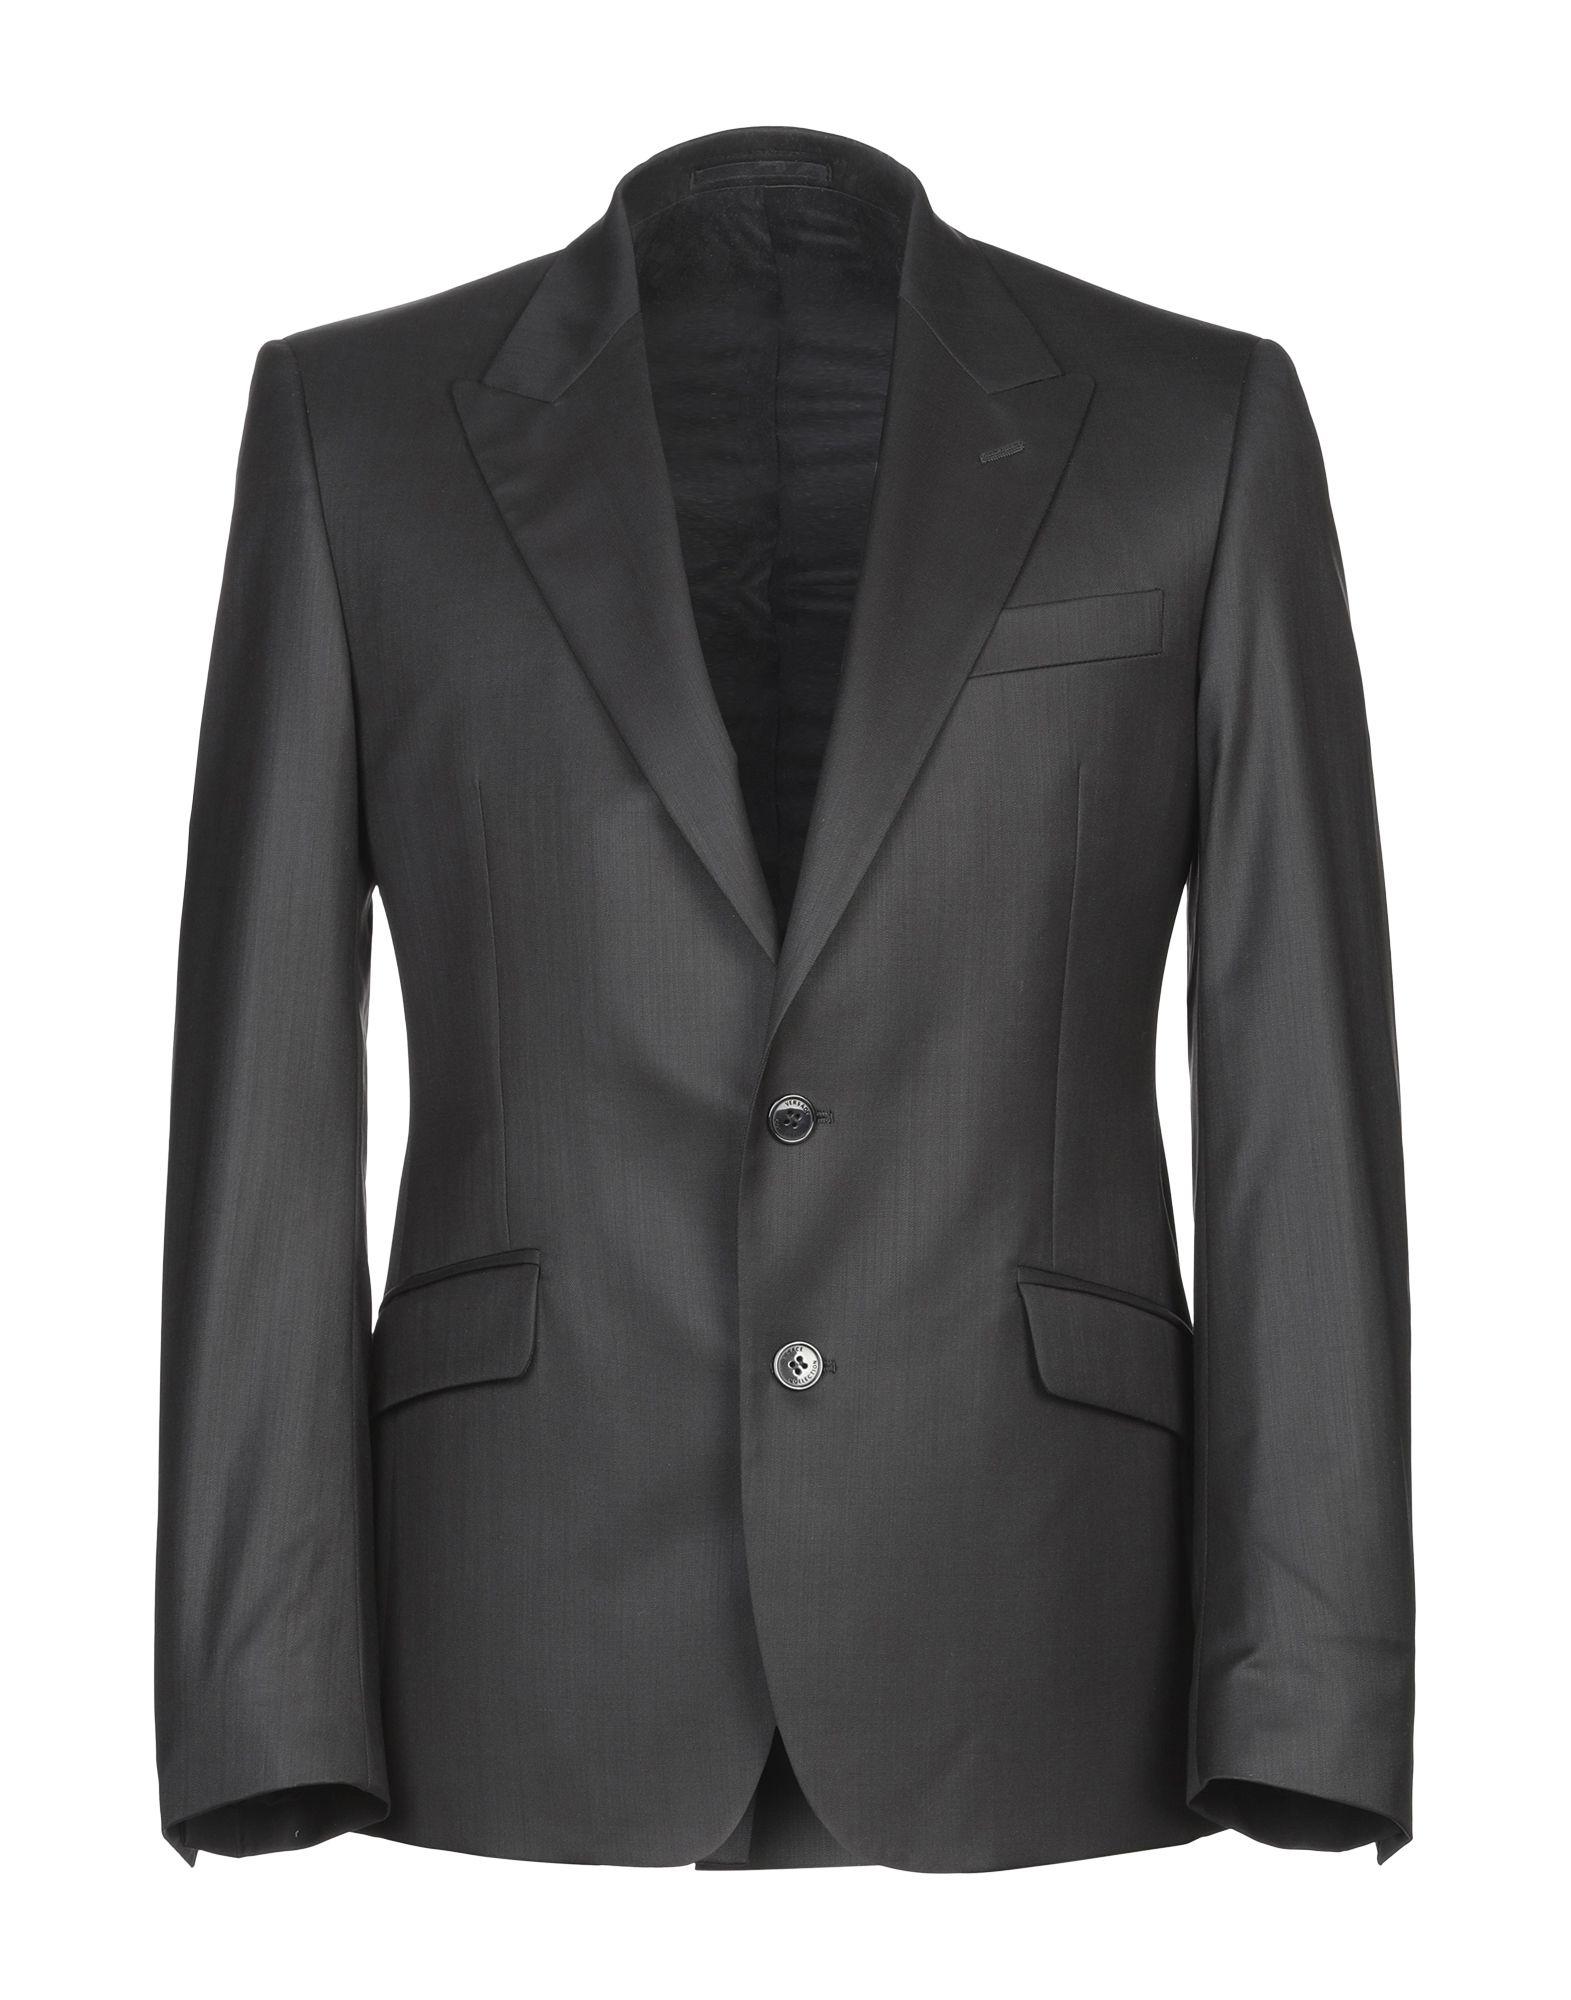 Versace Blazer in Black for Men - Lyst